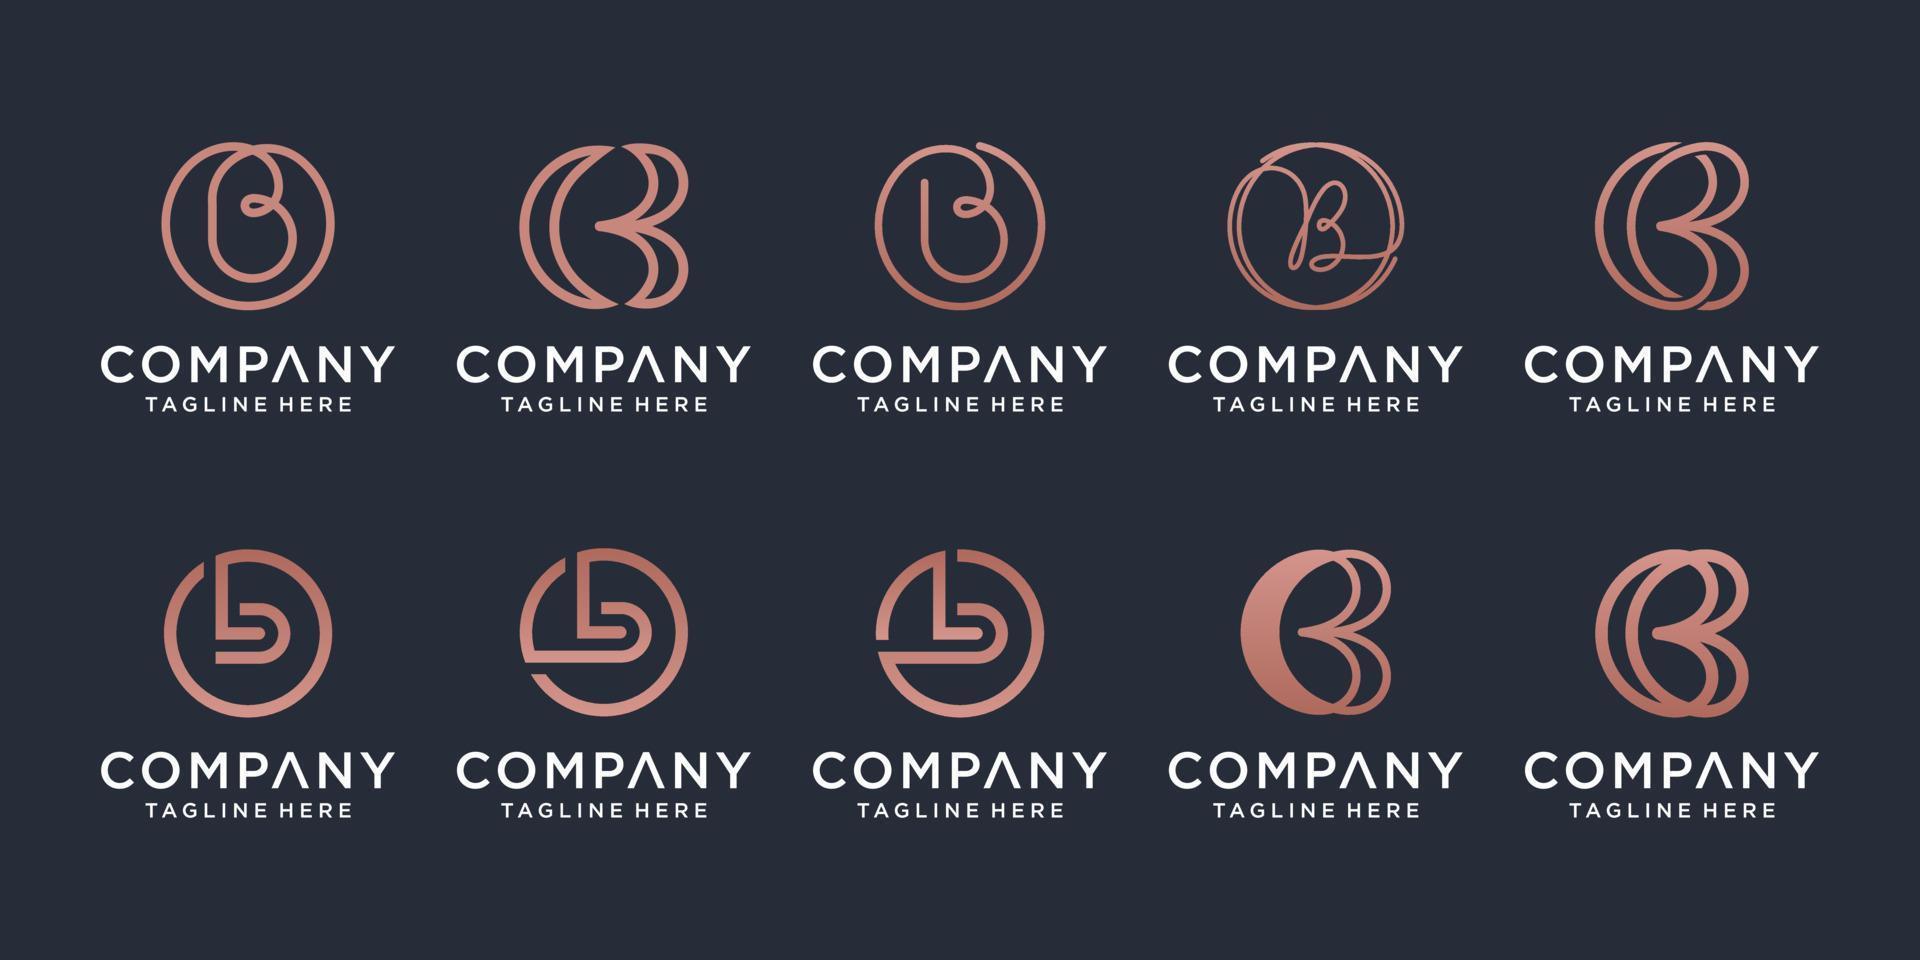 conjunto de modelo de design de logotipo criativo letra b. ícones para negócios de luxo, elegantes, simples. vetor